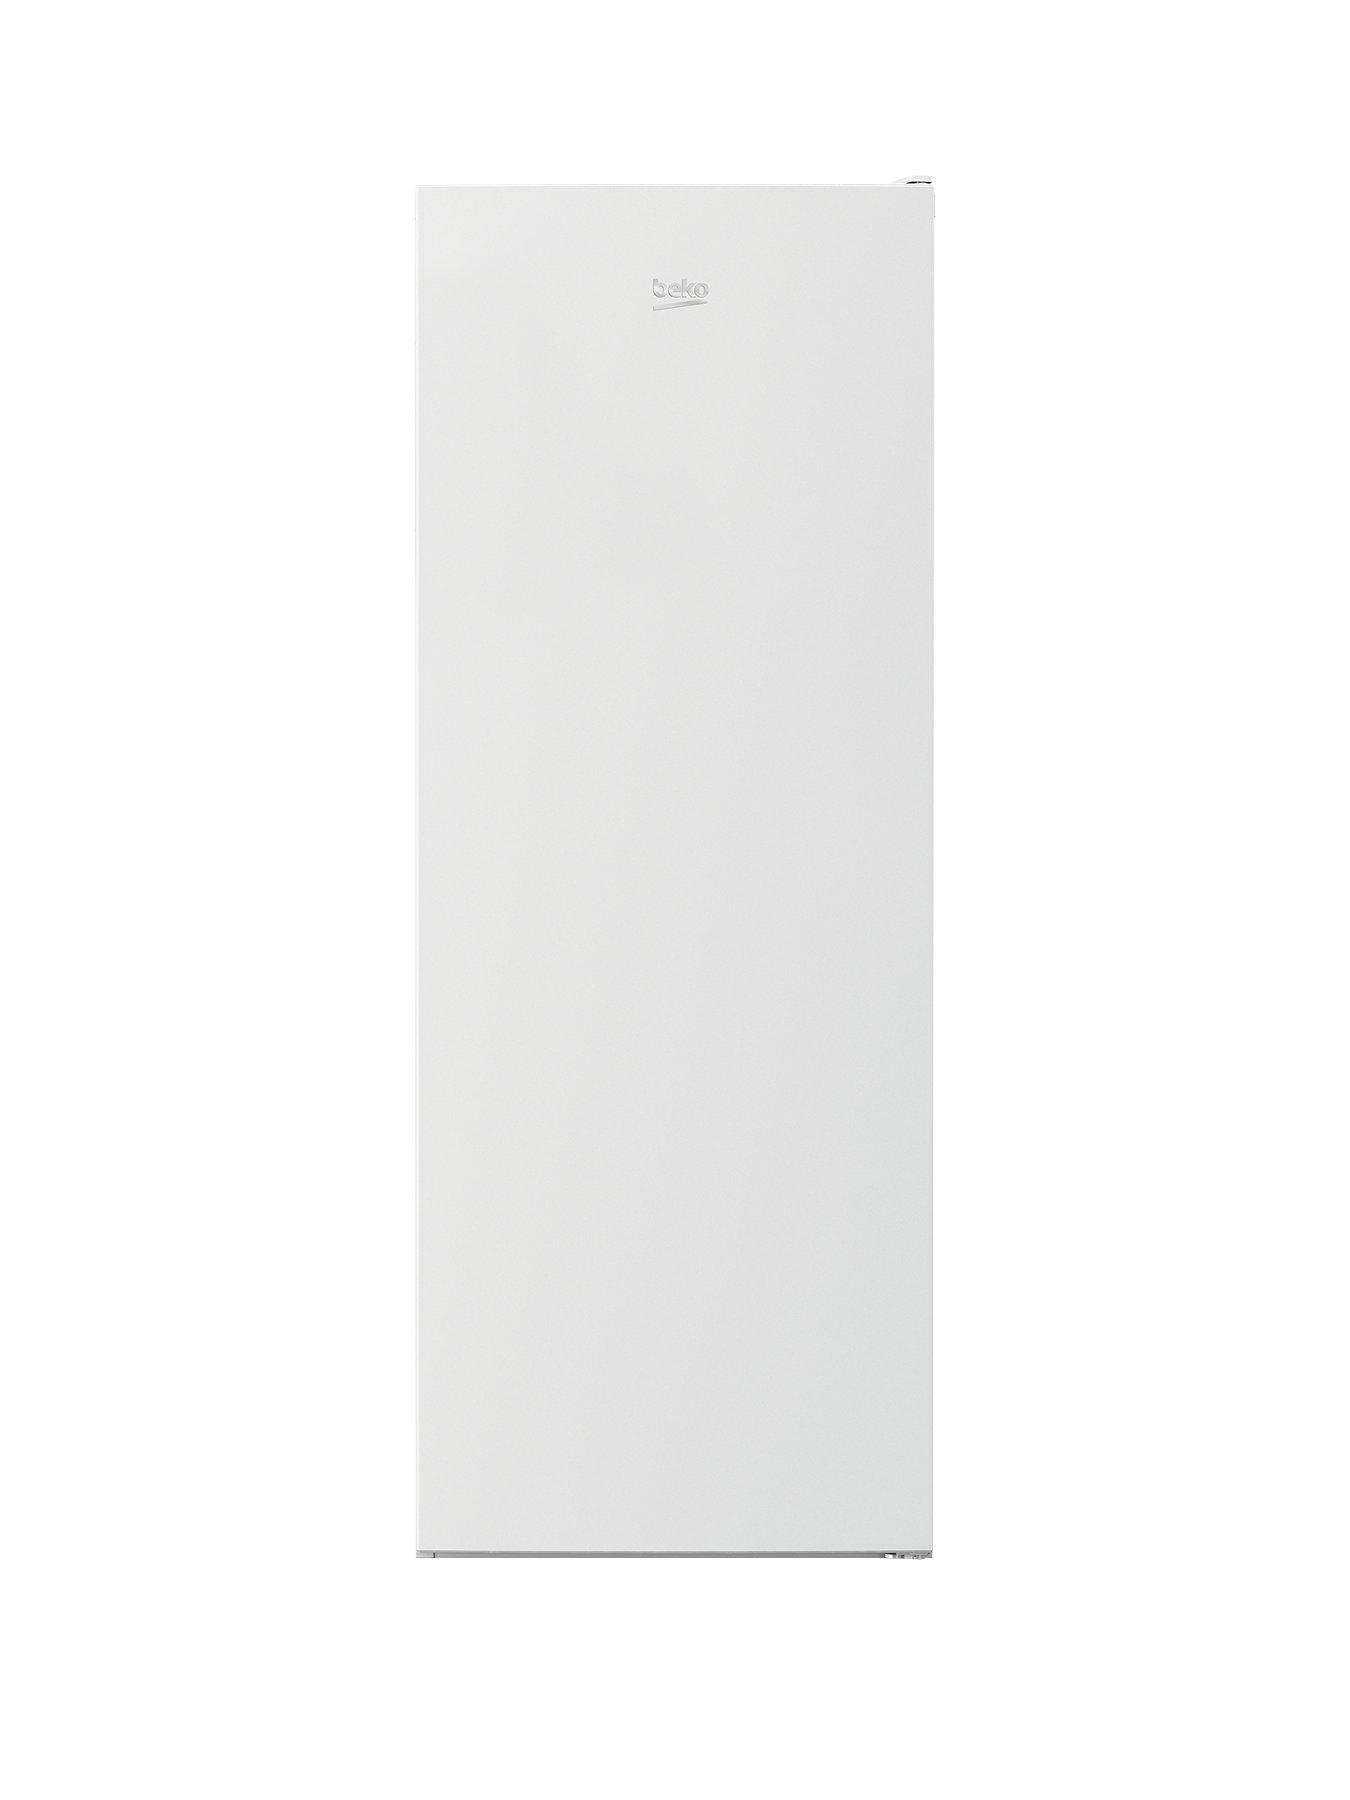 Beko Ffg1545W 55Cm Tall Freezer - White Review thumbnail